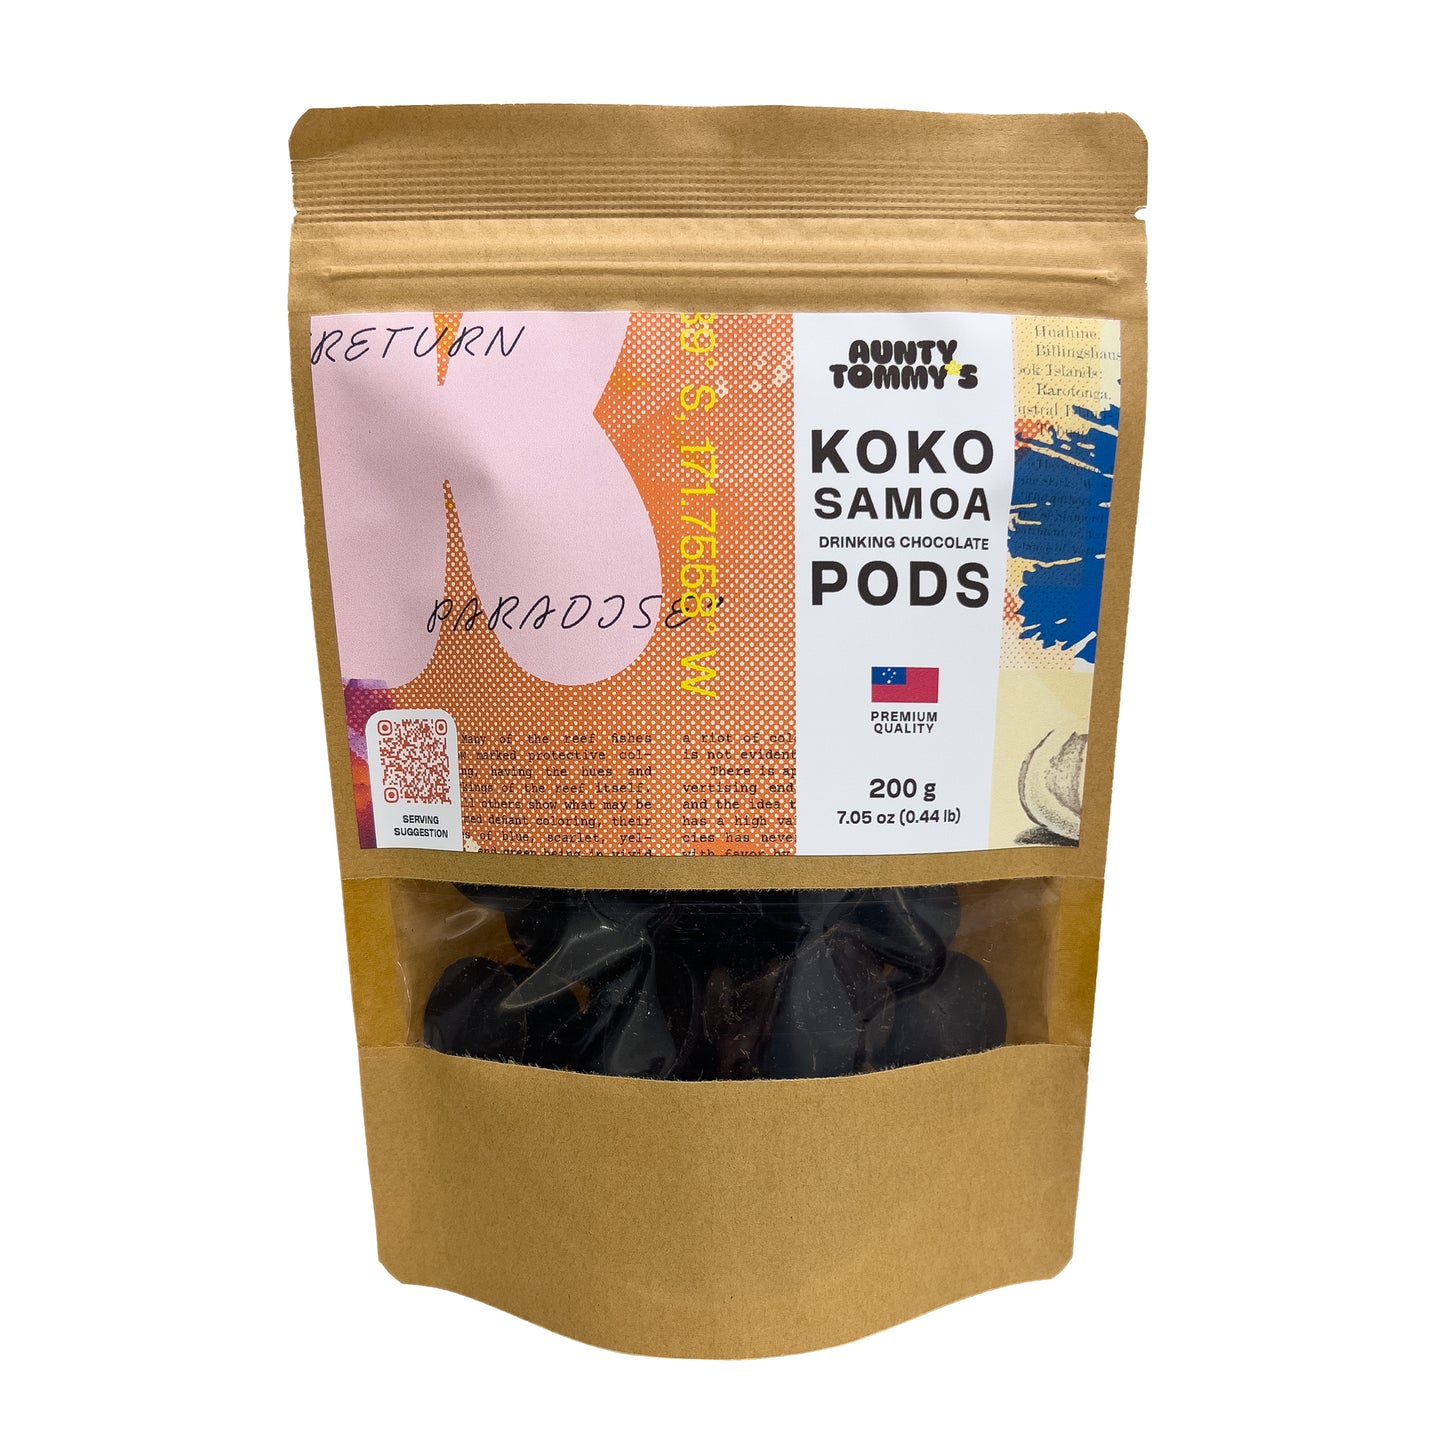 Koko Samoa Drinking Chocolate Pods 200g bag